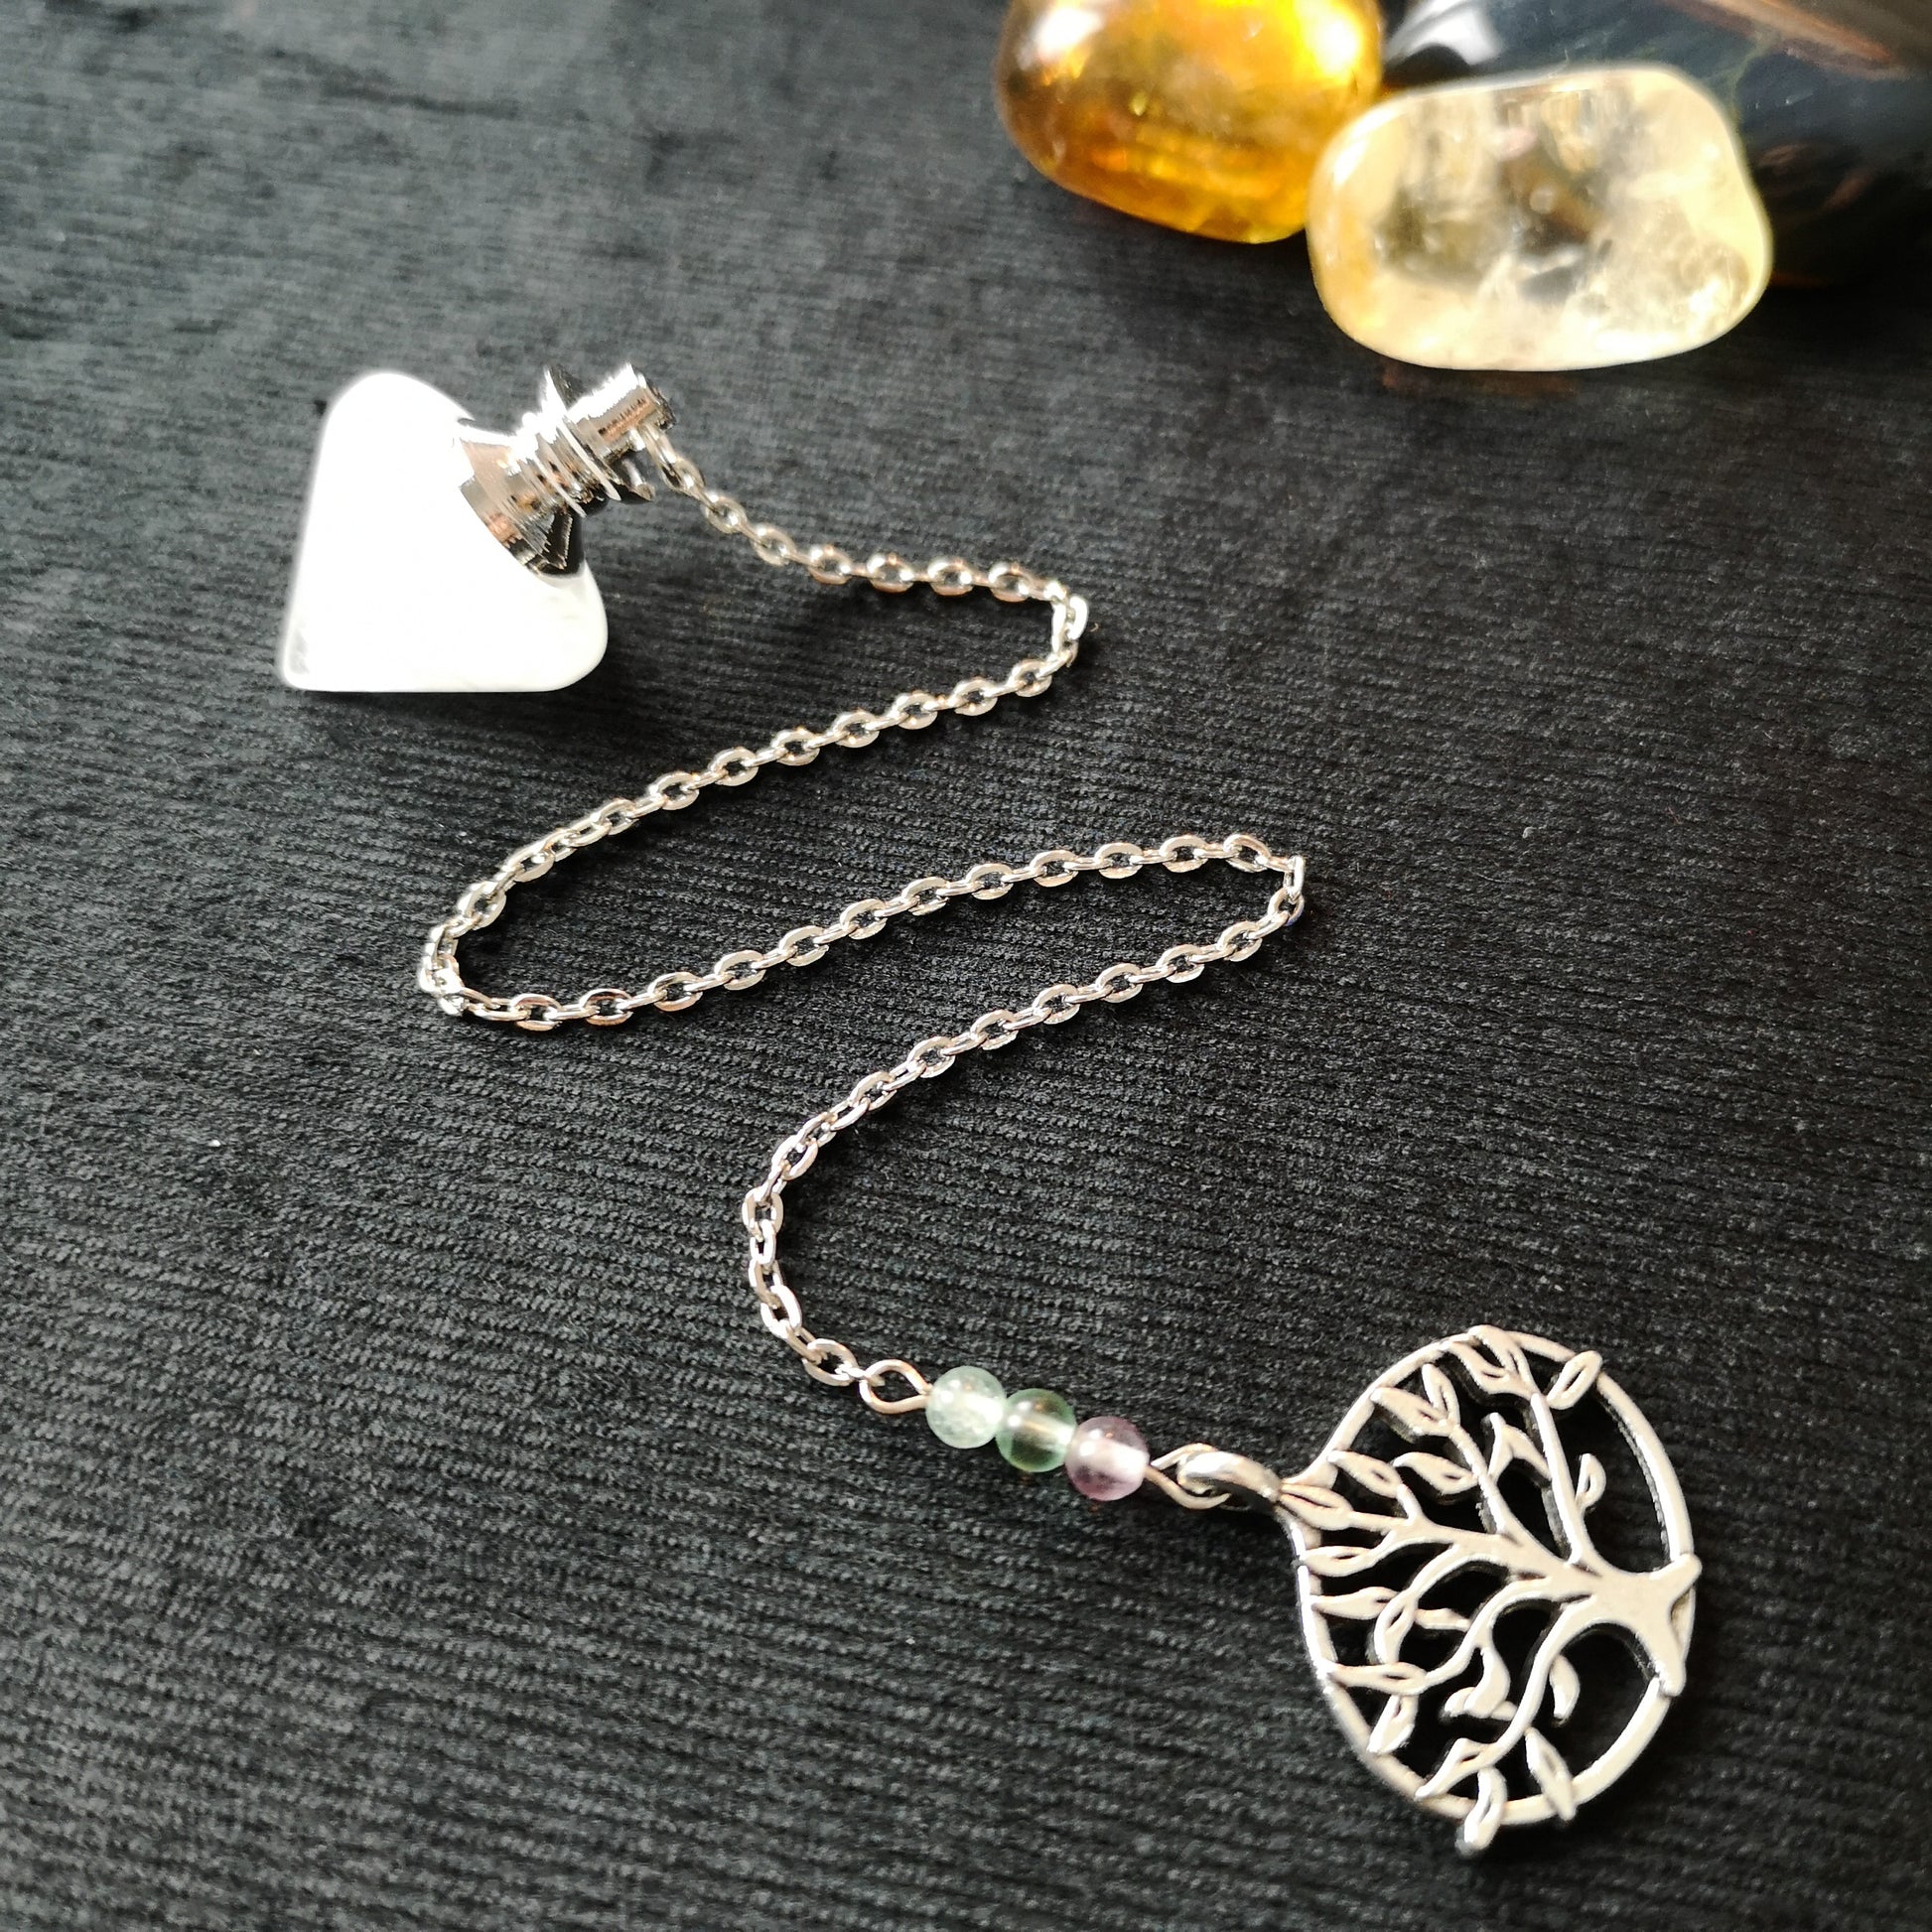 Clear quartz, fluorite and tree of life conical dowsing pendulum Baguette Magick